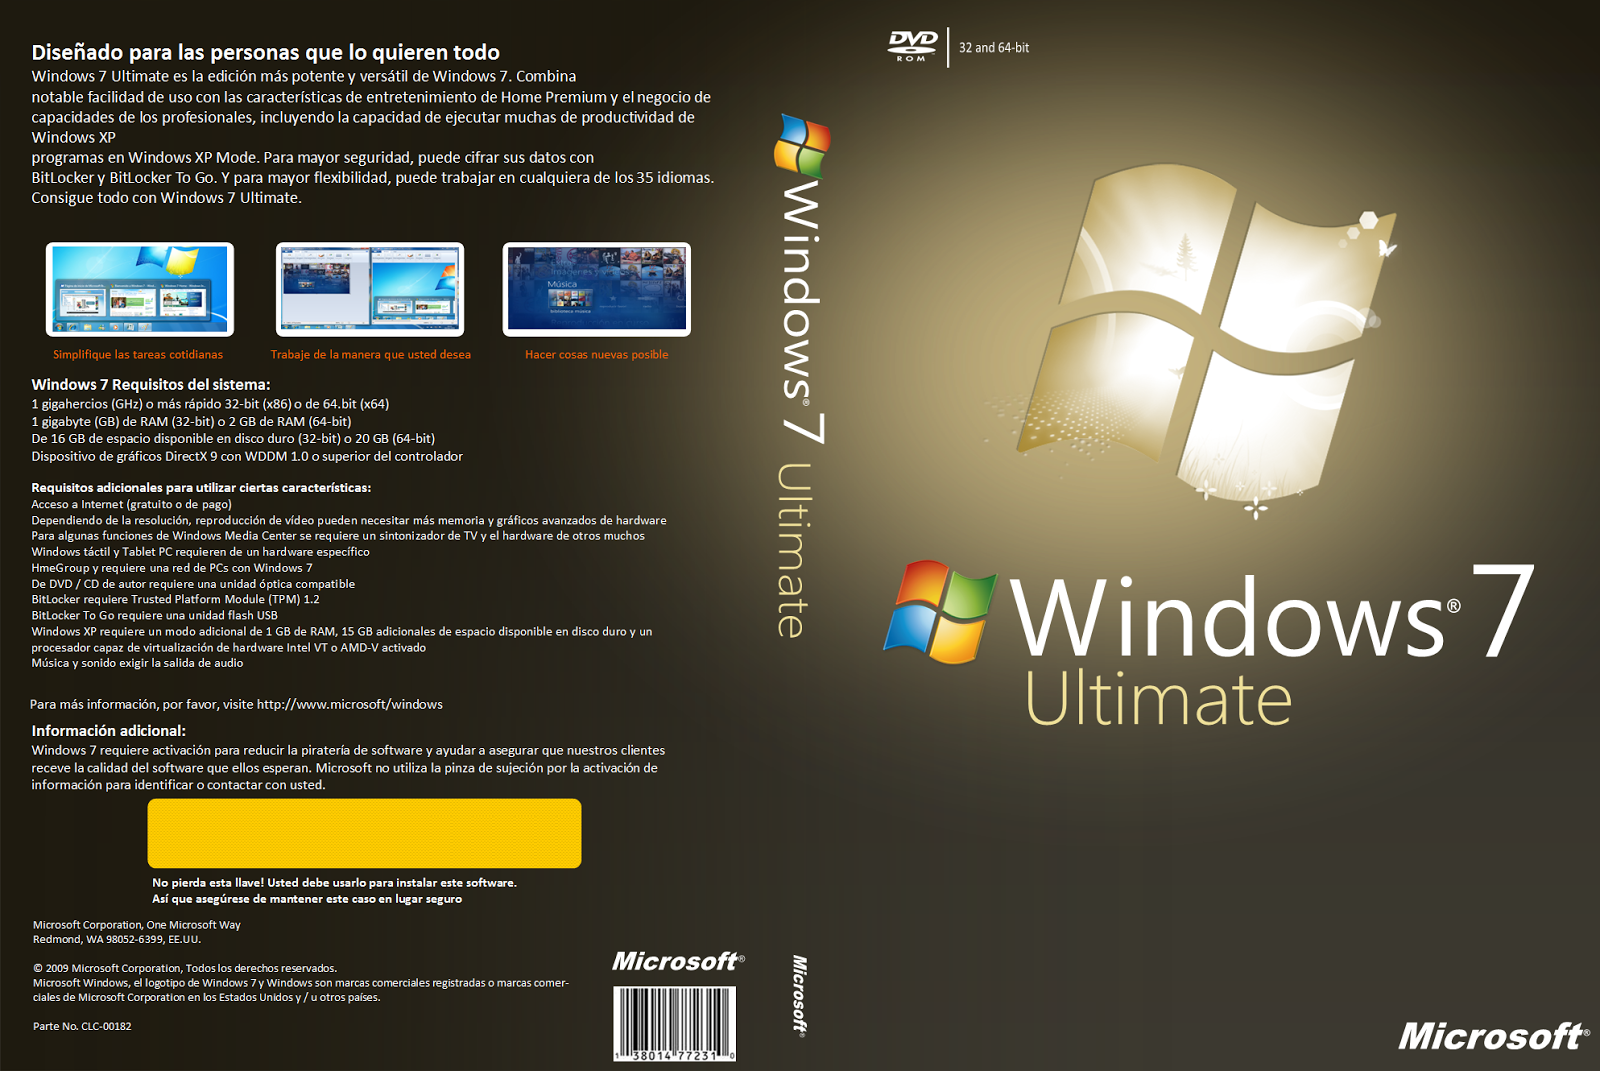 windows 7 ultimate 64-bit iso file download